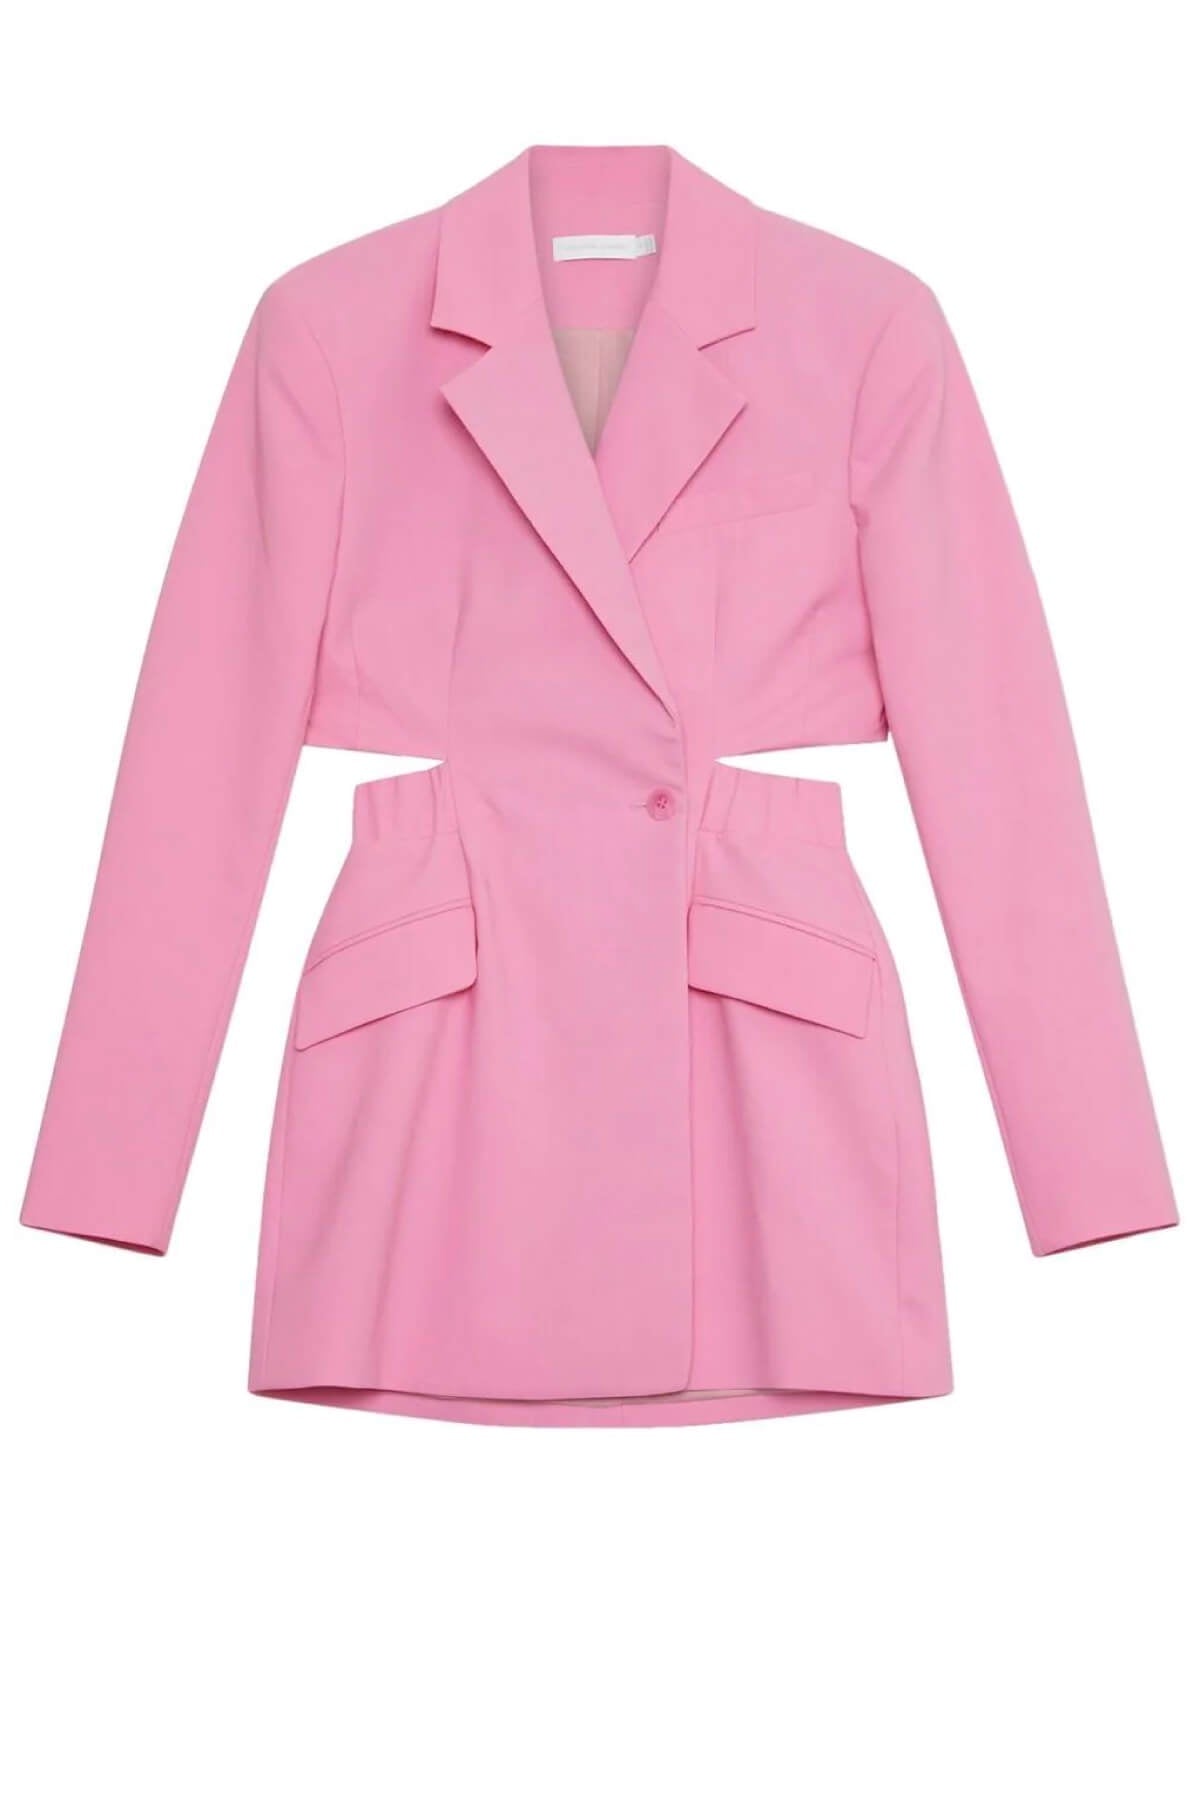 Simkhai Kylo Cut-Out Blazer Mini Dress - Taffy Pink